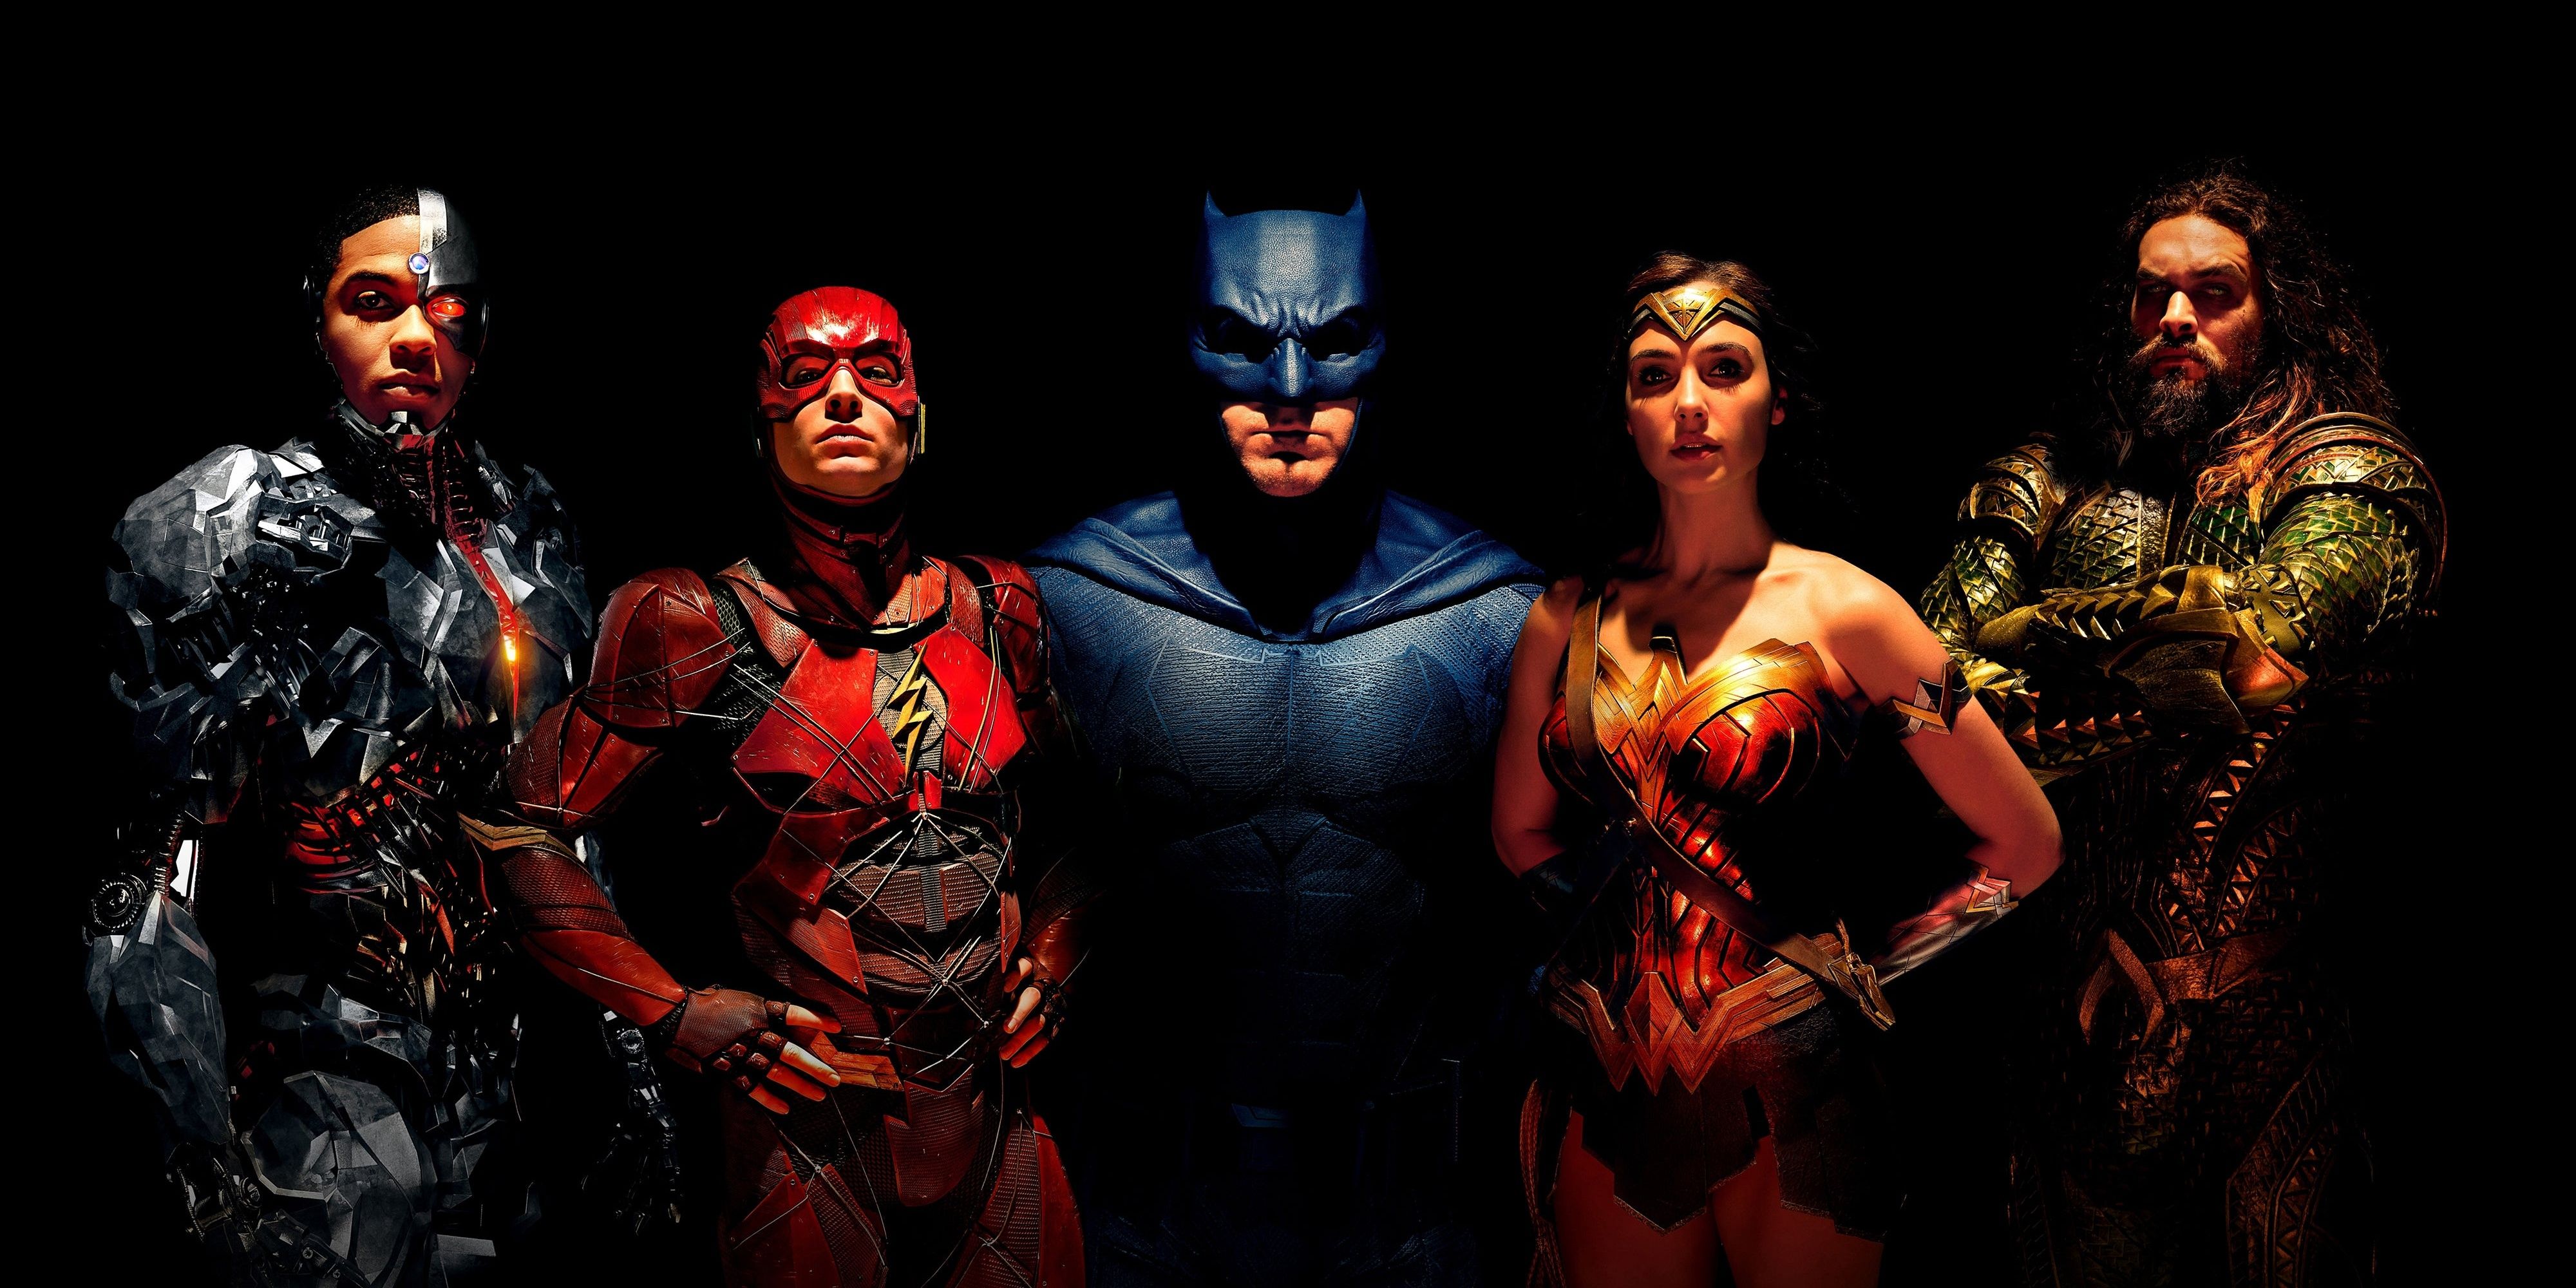 Cyborg, Flash, Batman, Wonder Woman, and Aquaman make up the DCEU Justice League